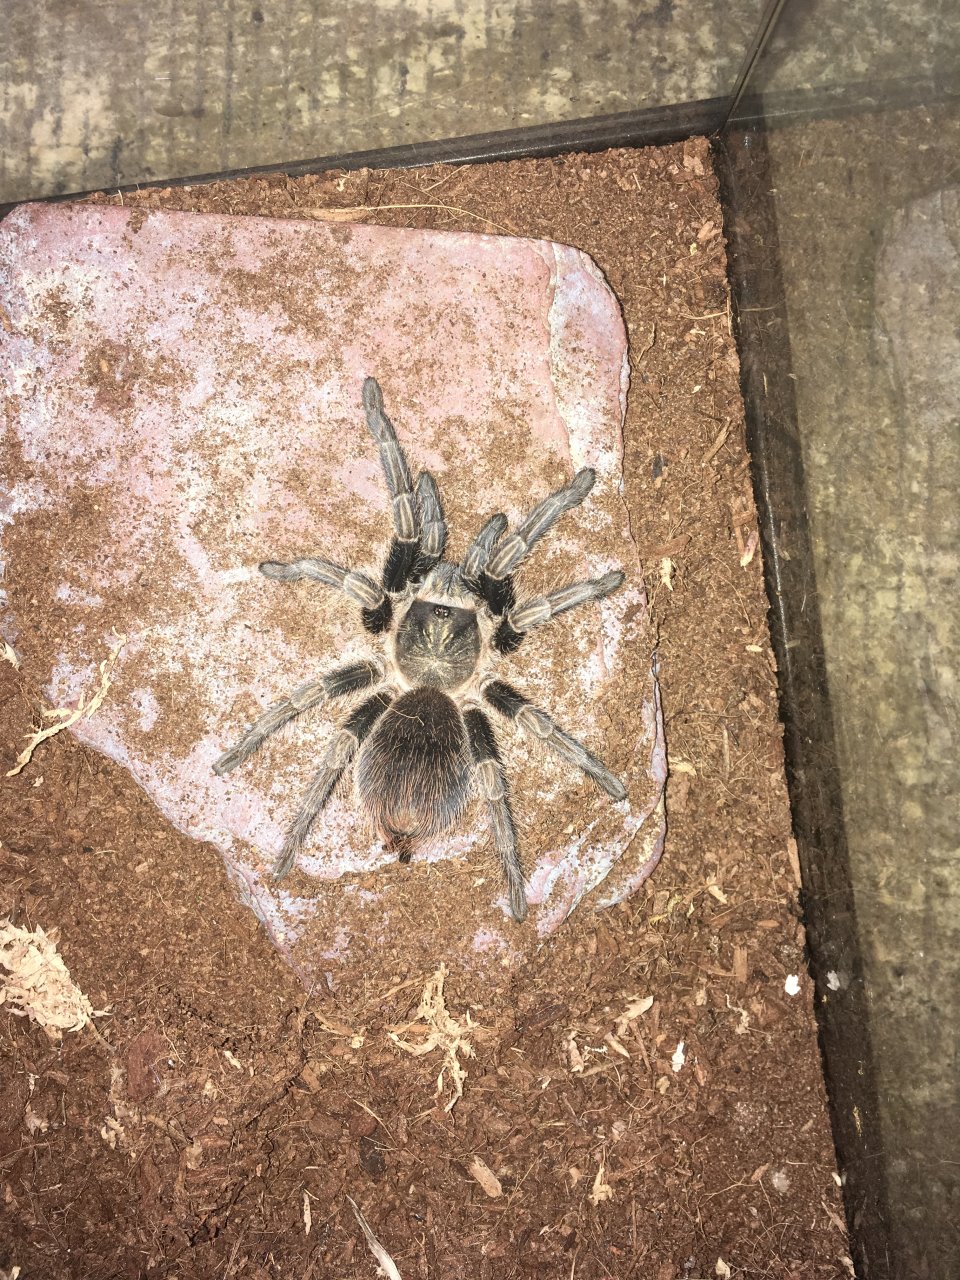 Please help ID pet store spider